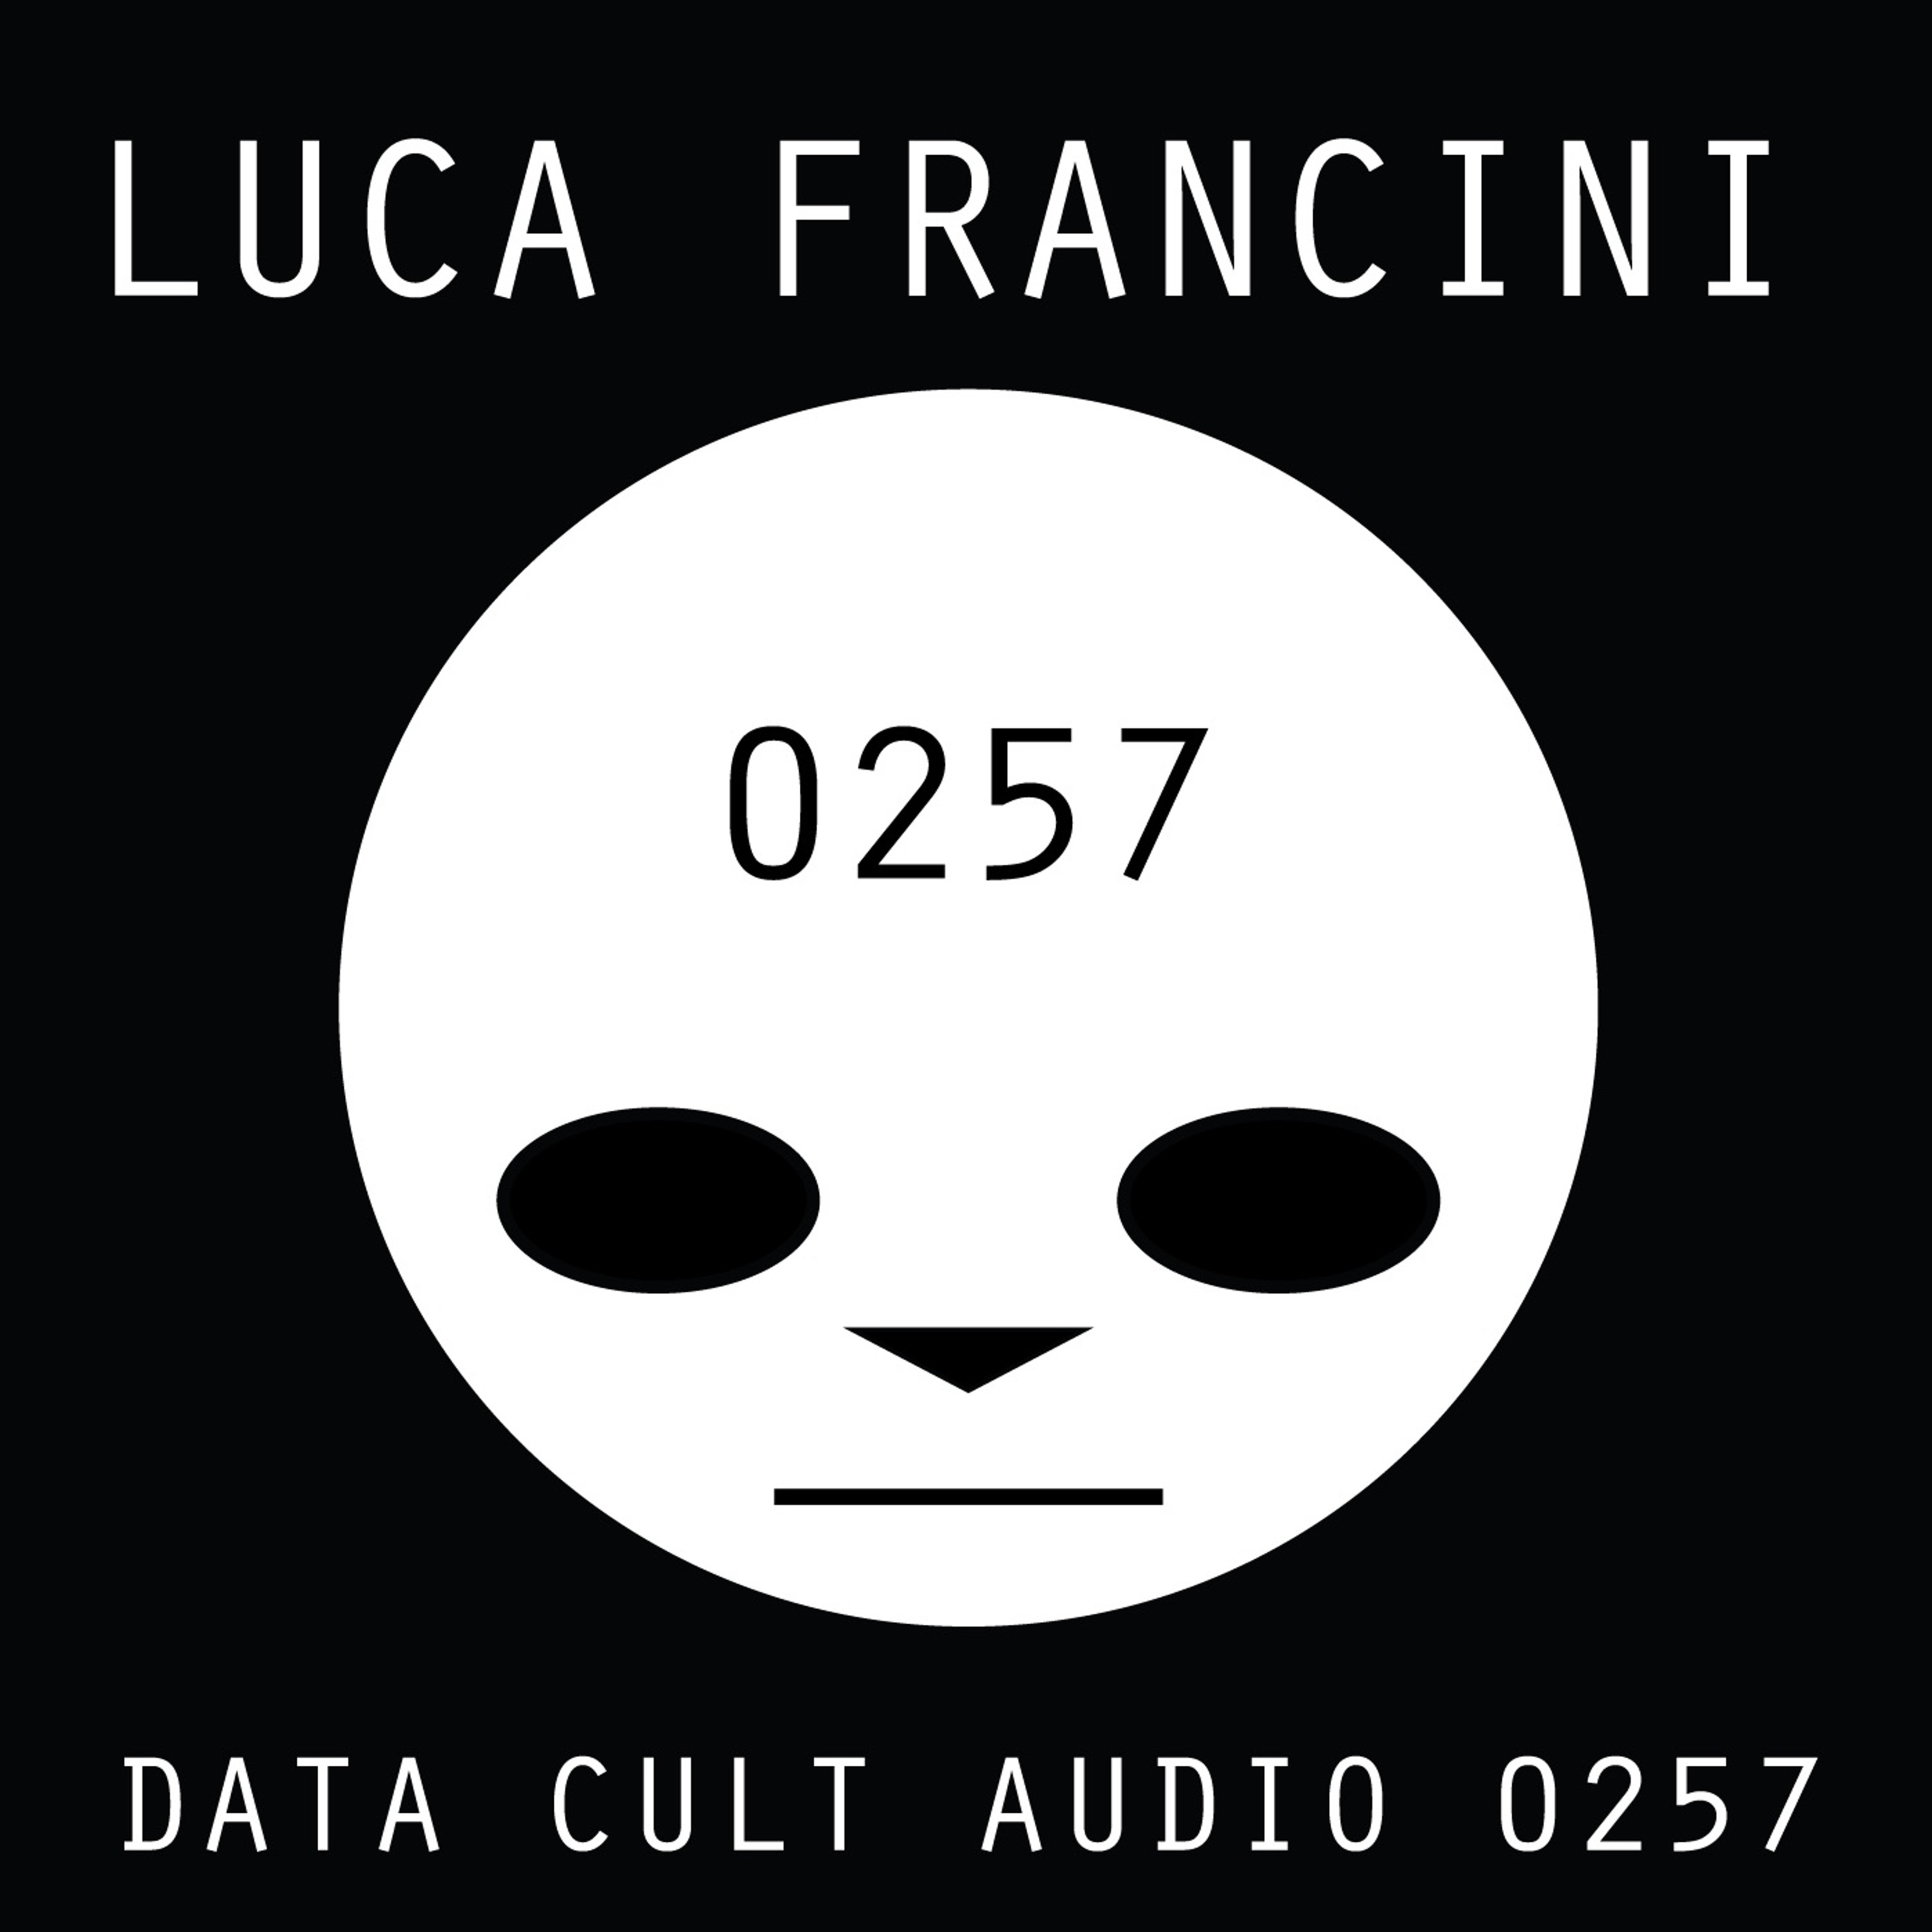 Data Cult Audio 0257 - Luca Francini